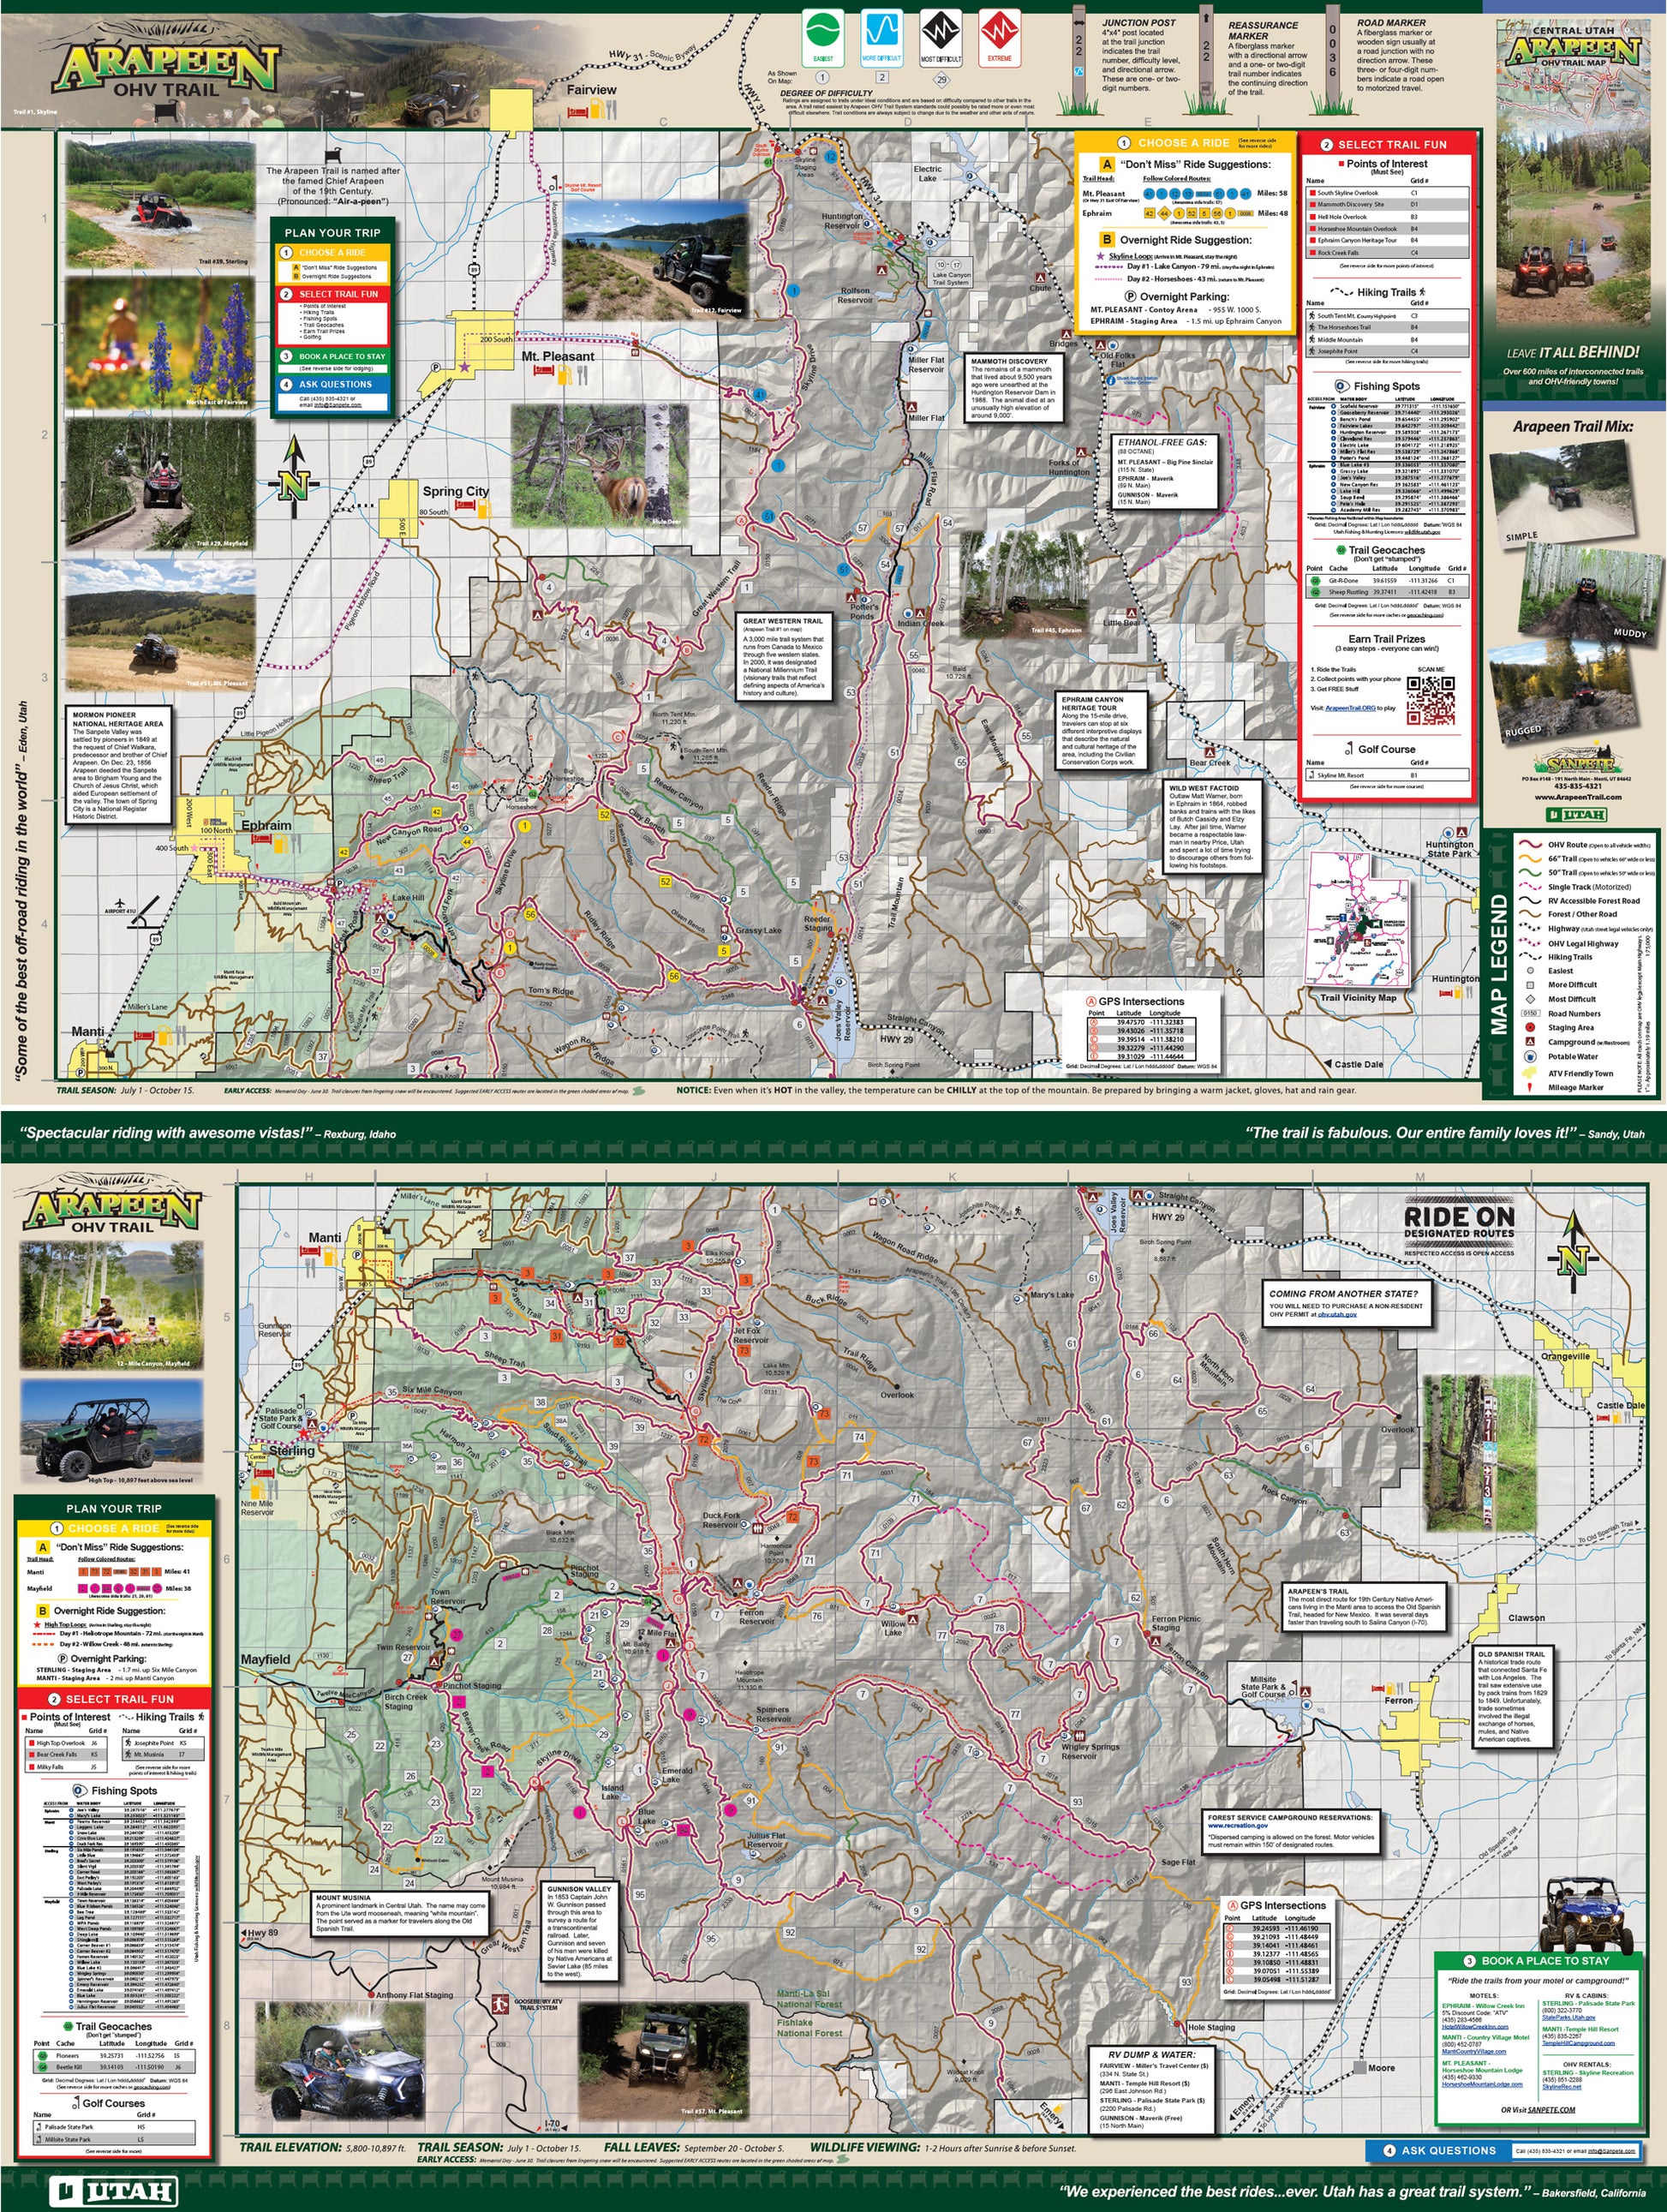 Utah OHV Trail Maps | Utah OHV Trails Map | OHV Trail Maps Utah